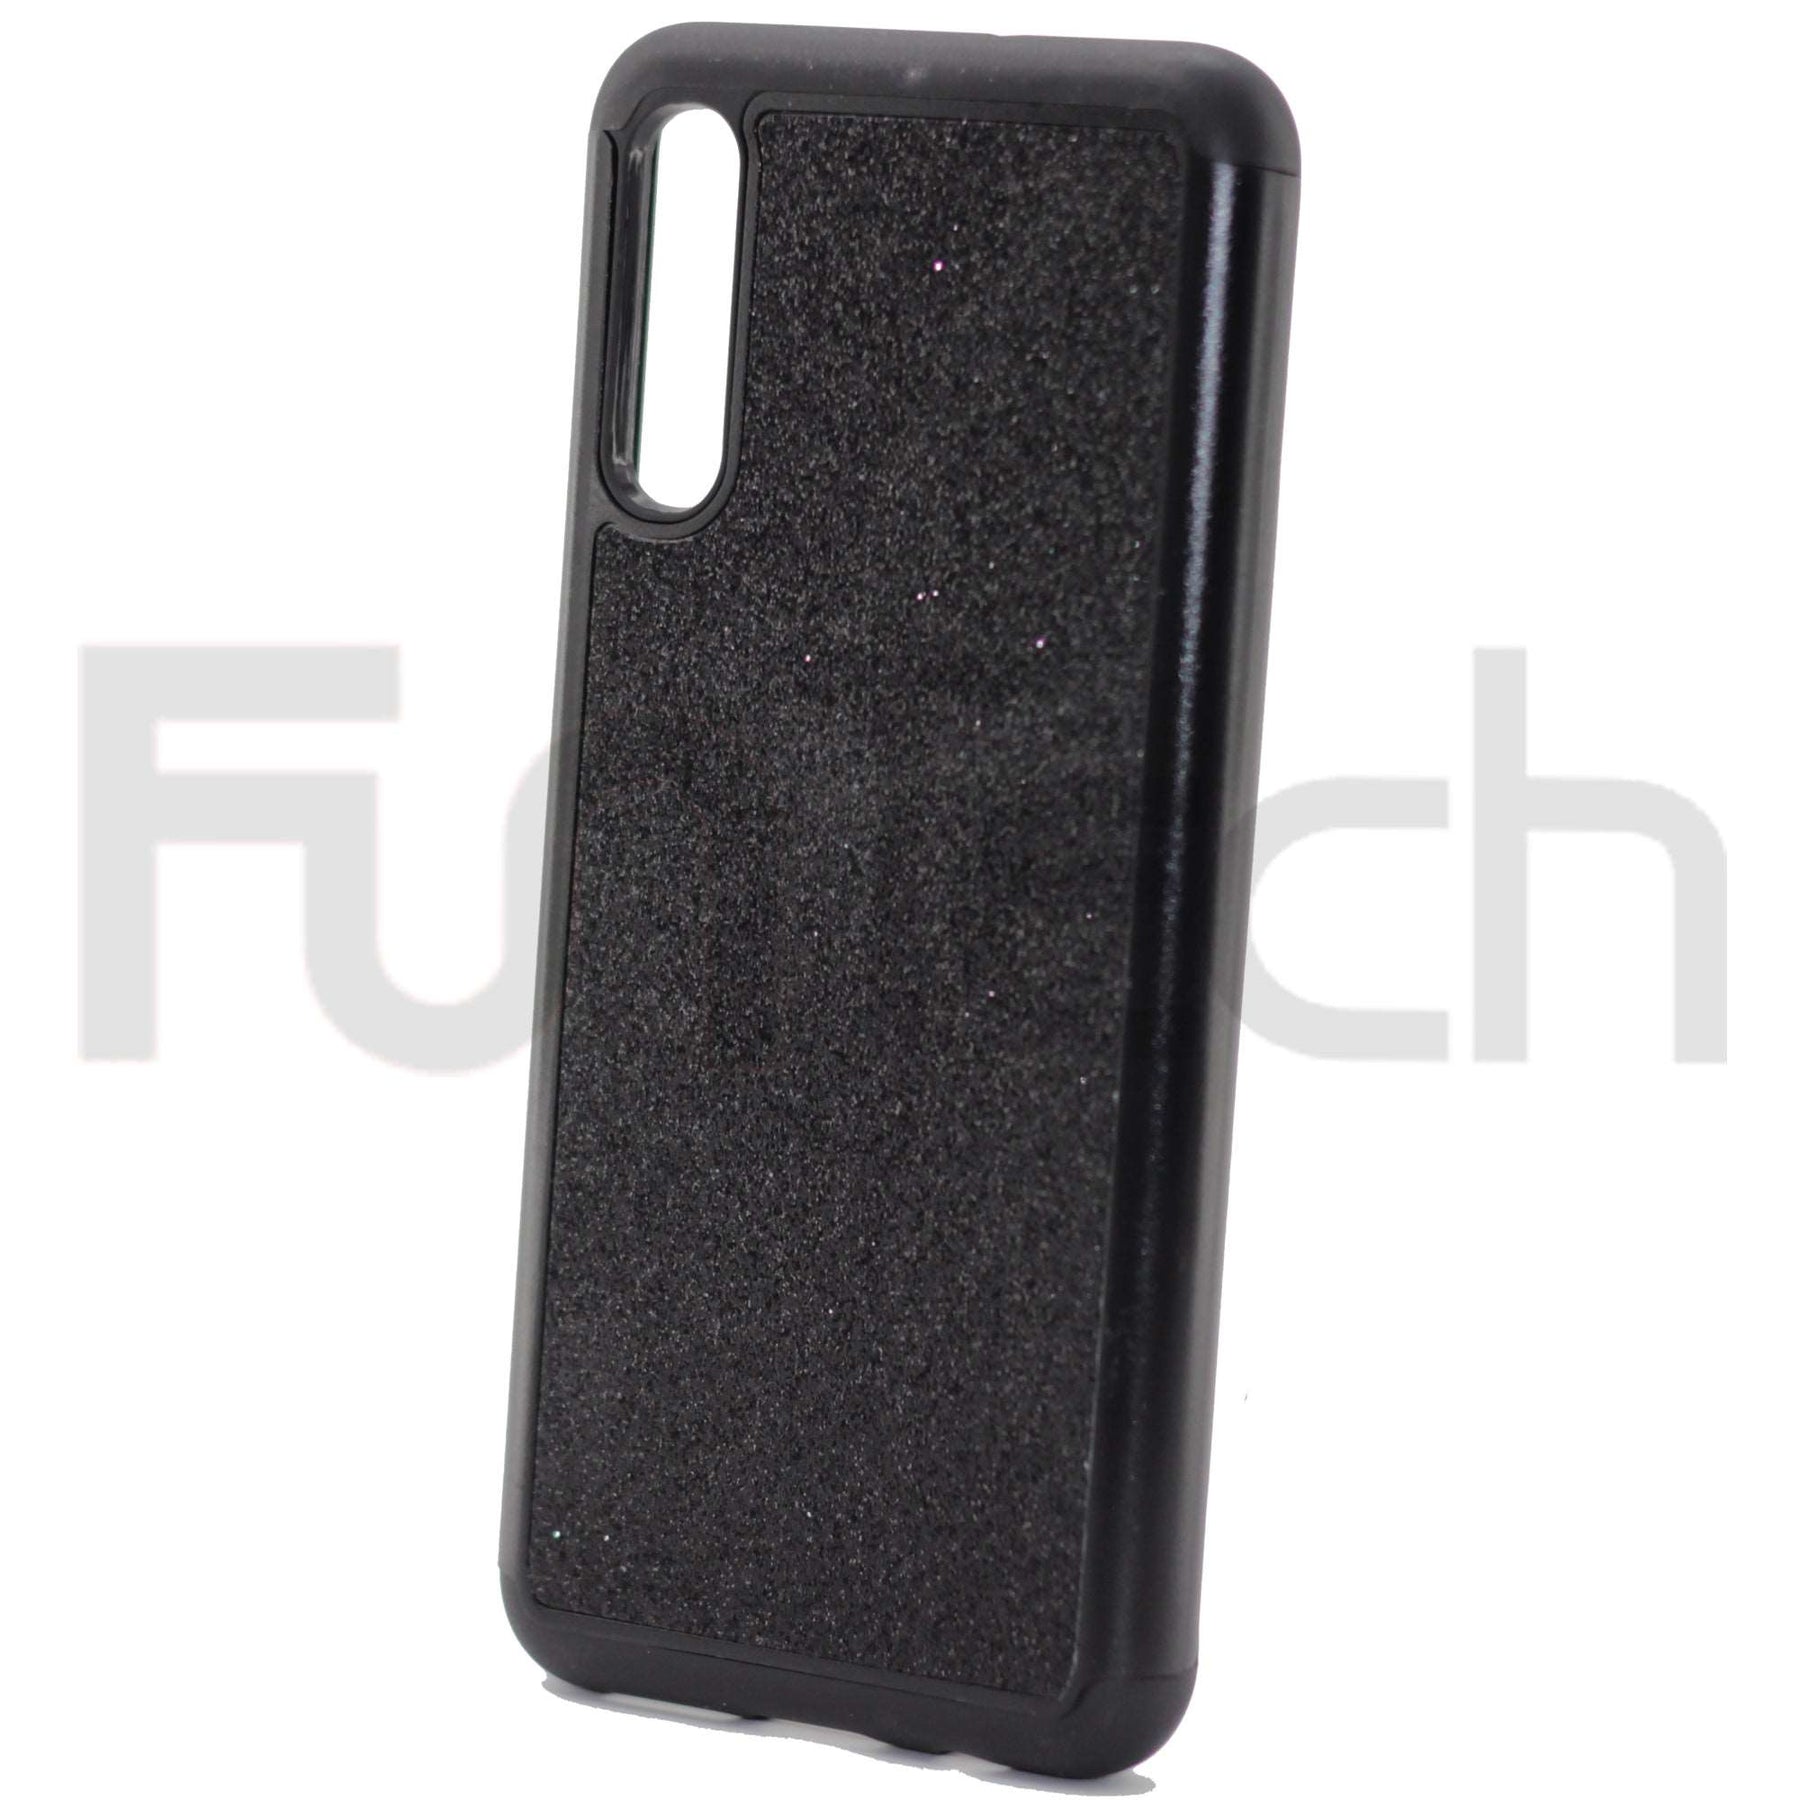 Samsung A50, Shockproof black glitter, phone case.